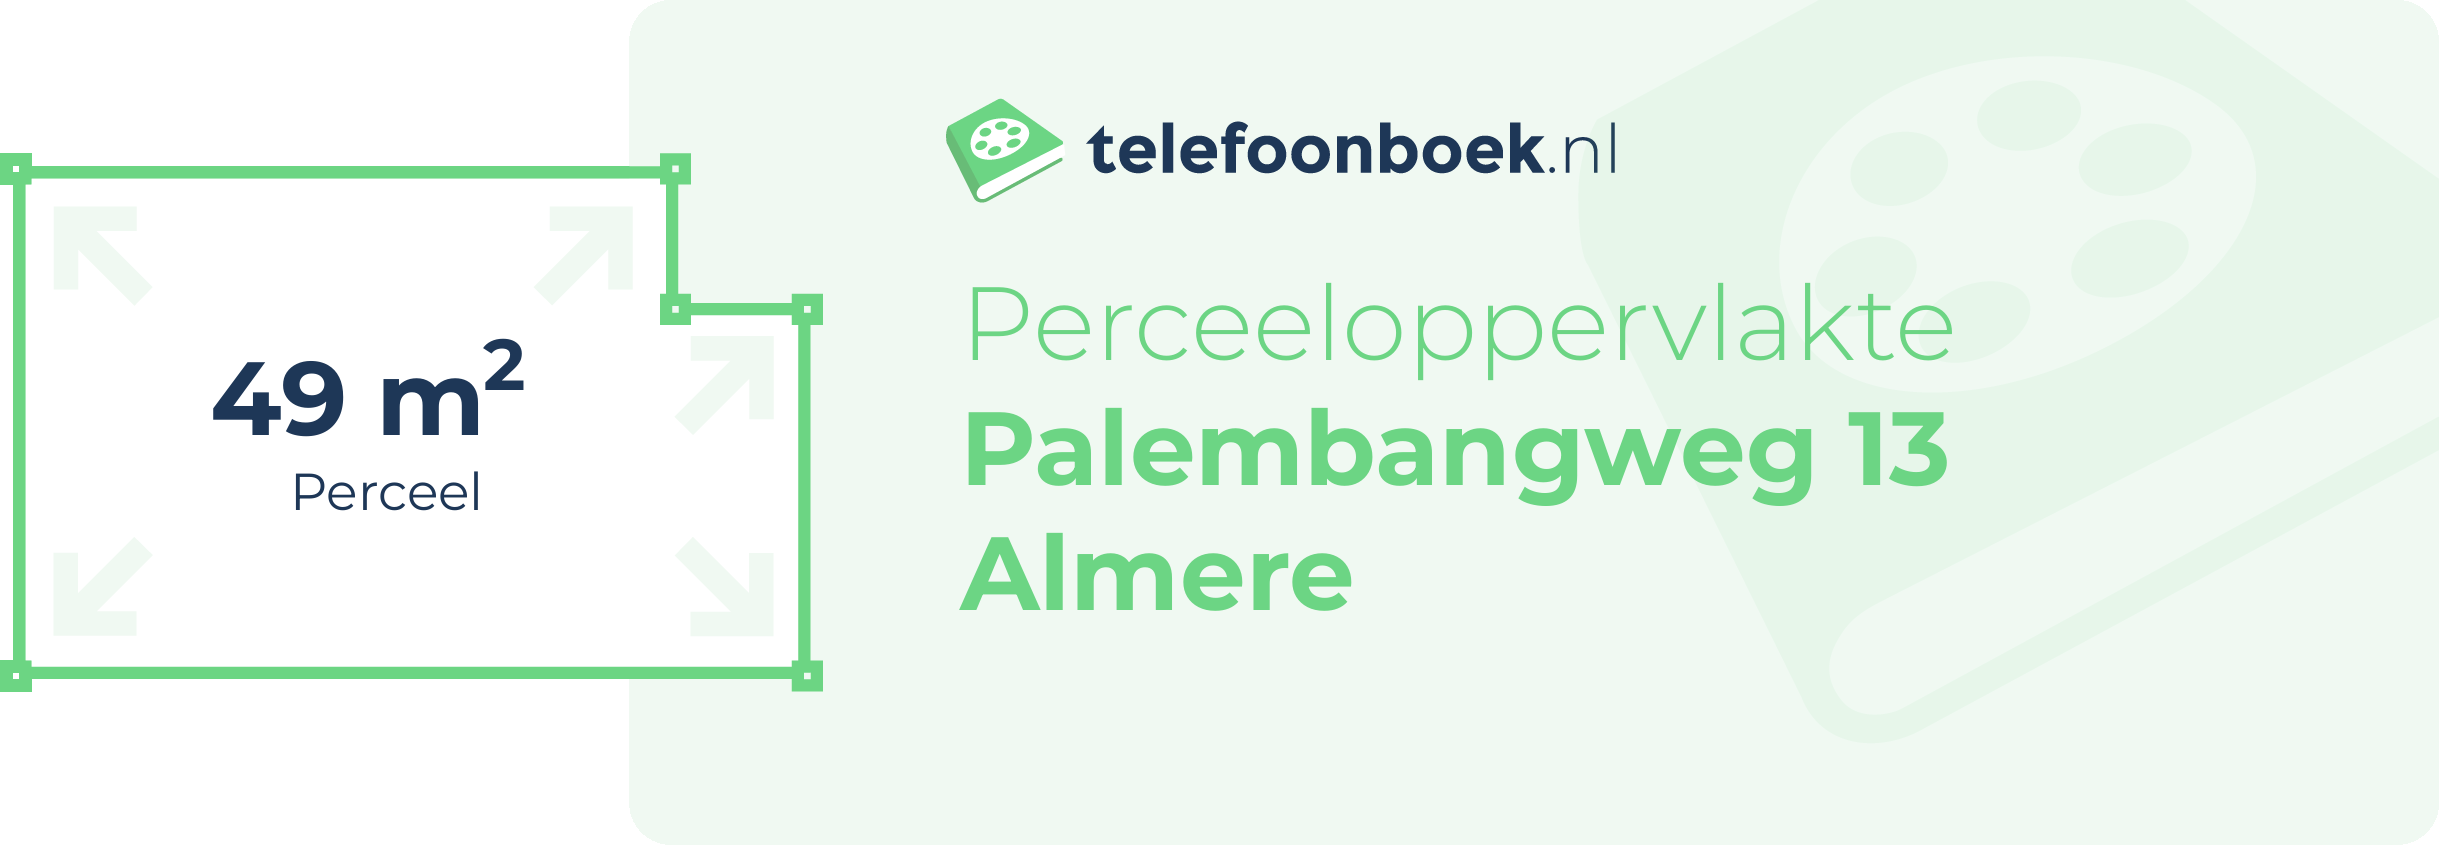 Perceeloppervlakte Palembangweg 13 Almere